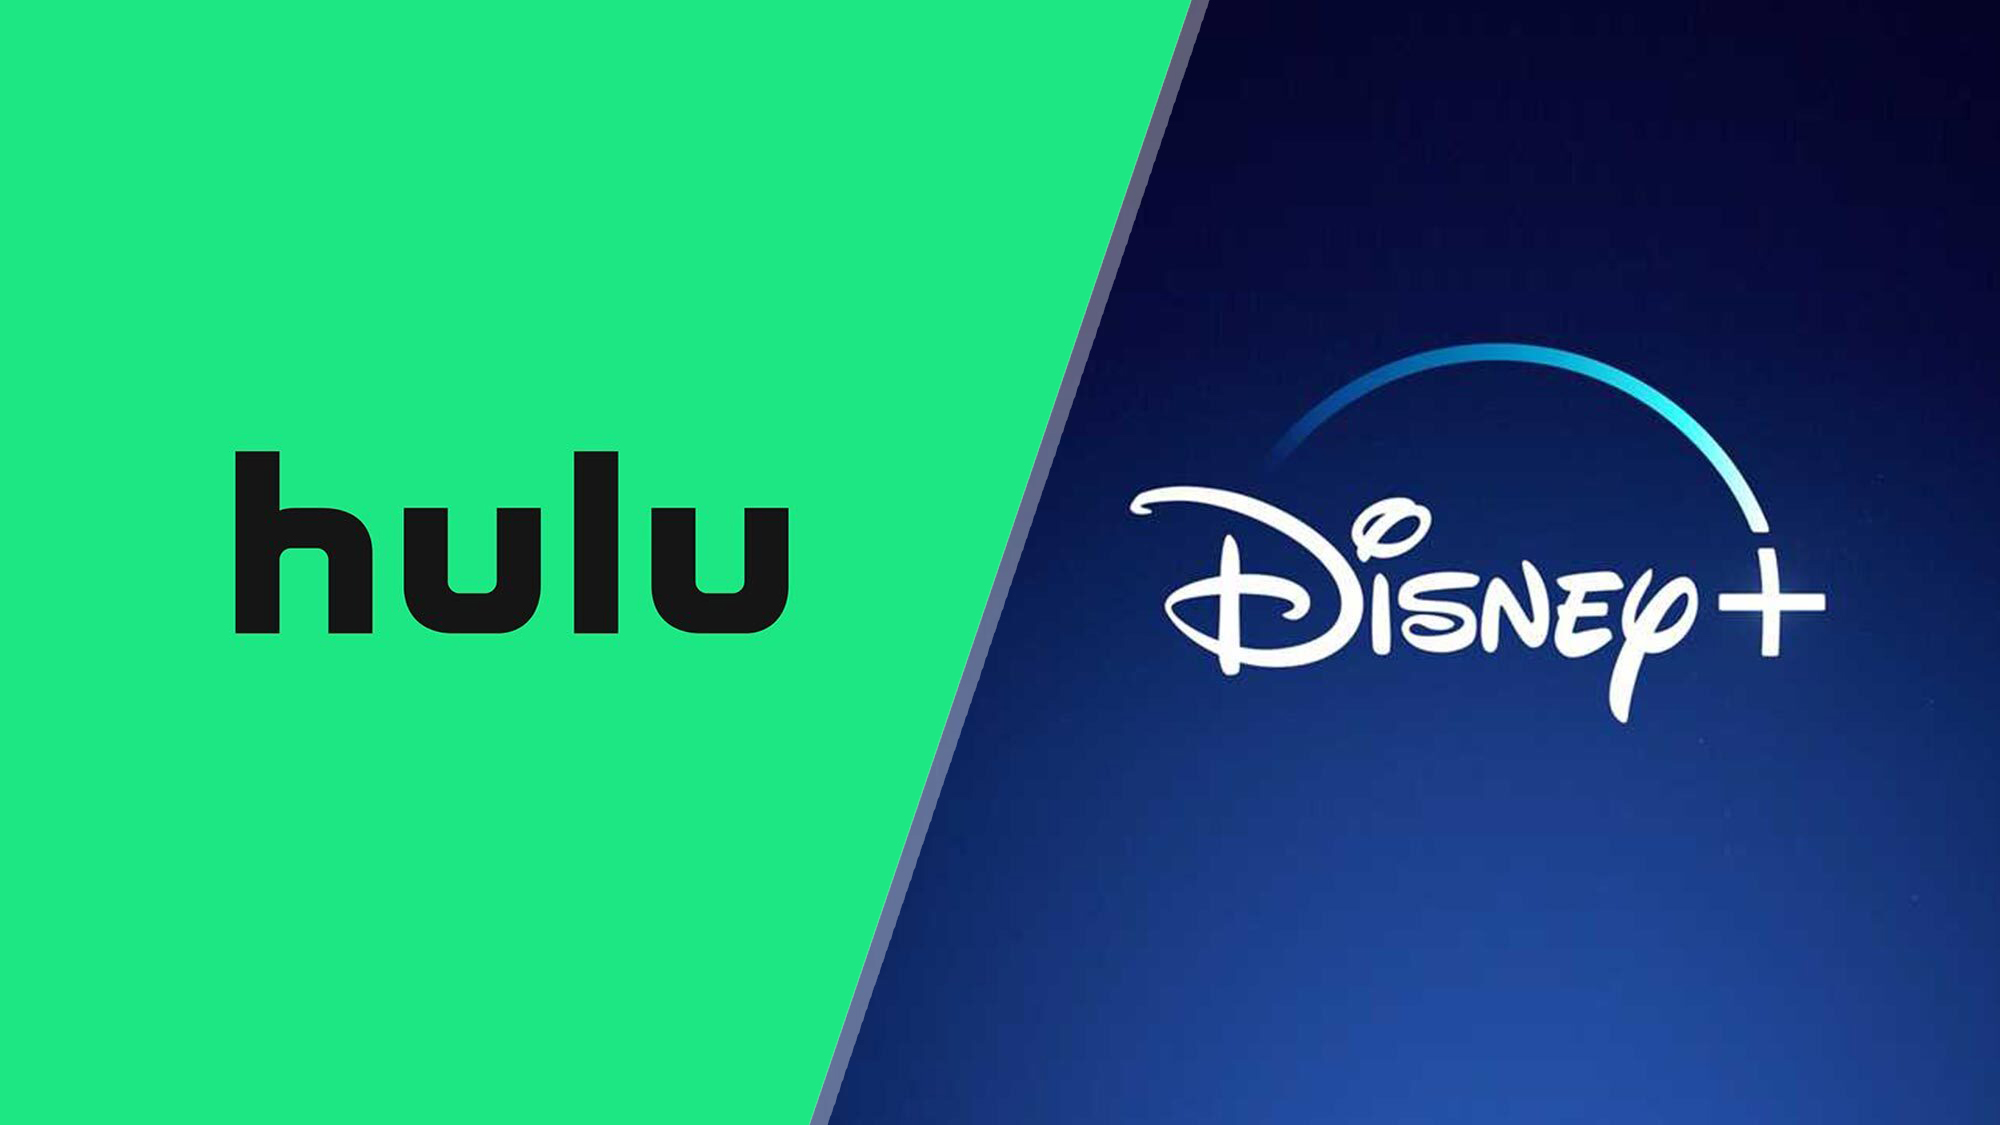 (Soldan sağa) Hulu, Disney Plus logoları